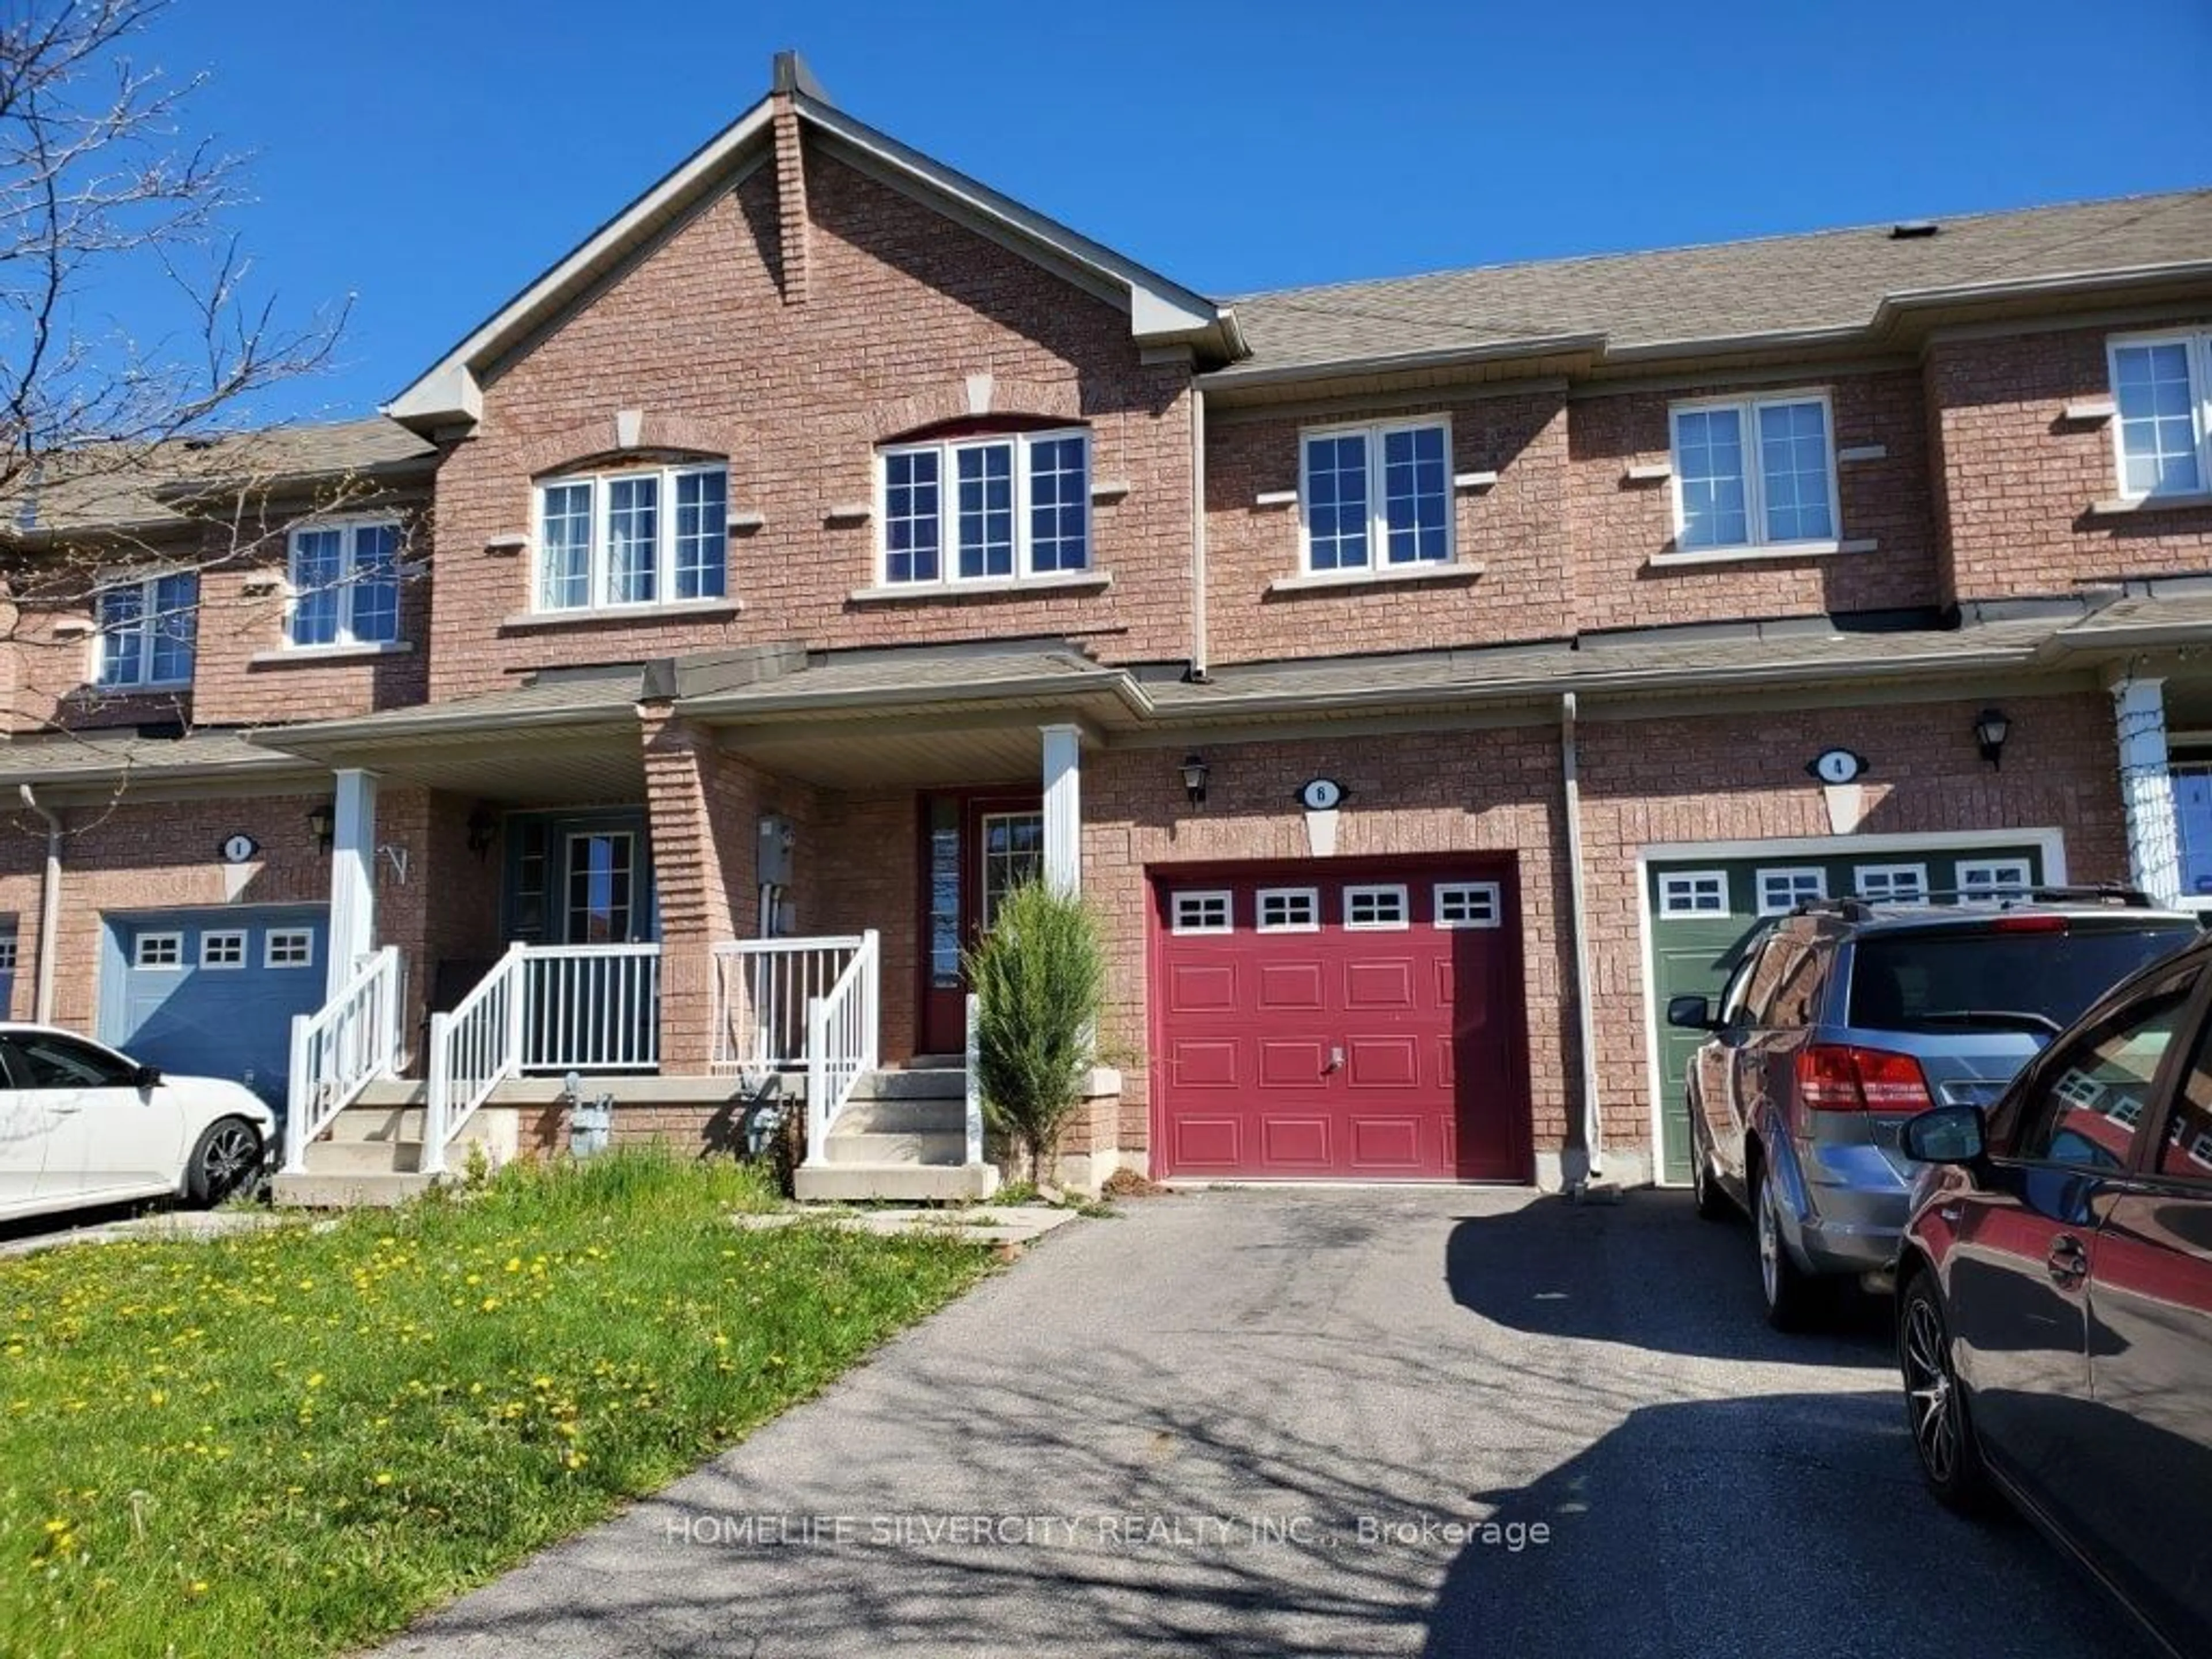 Home with brick exterior material for 6 Tanasi Rd, Brampton Ontario L6X 0K4